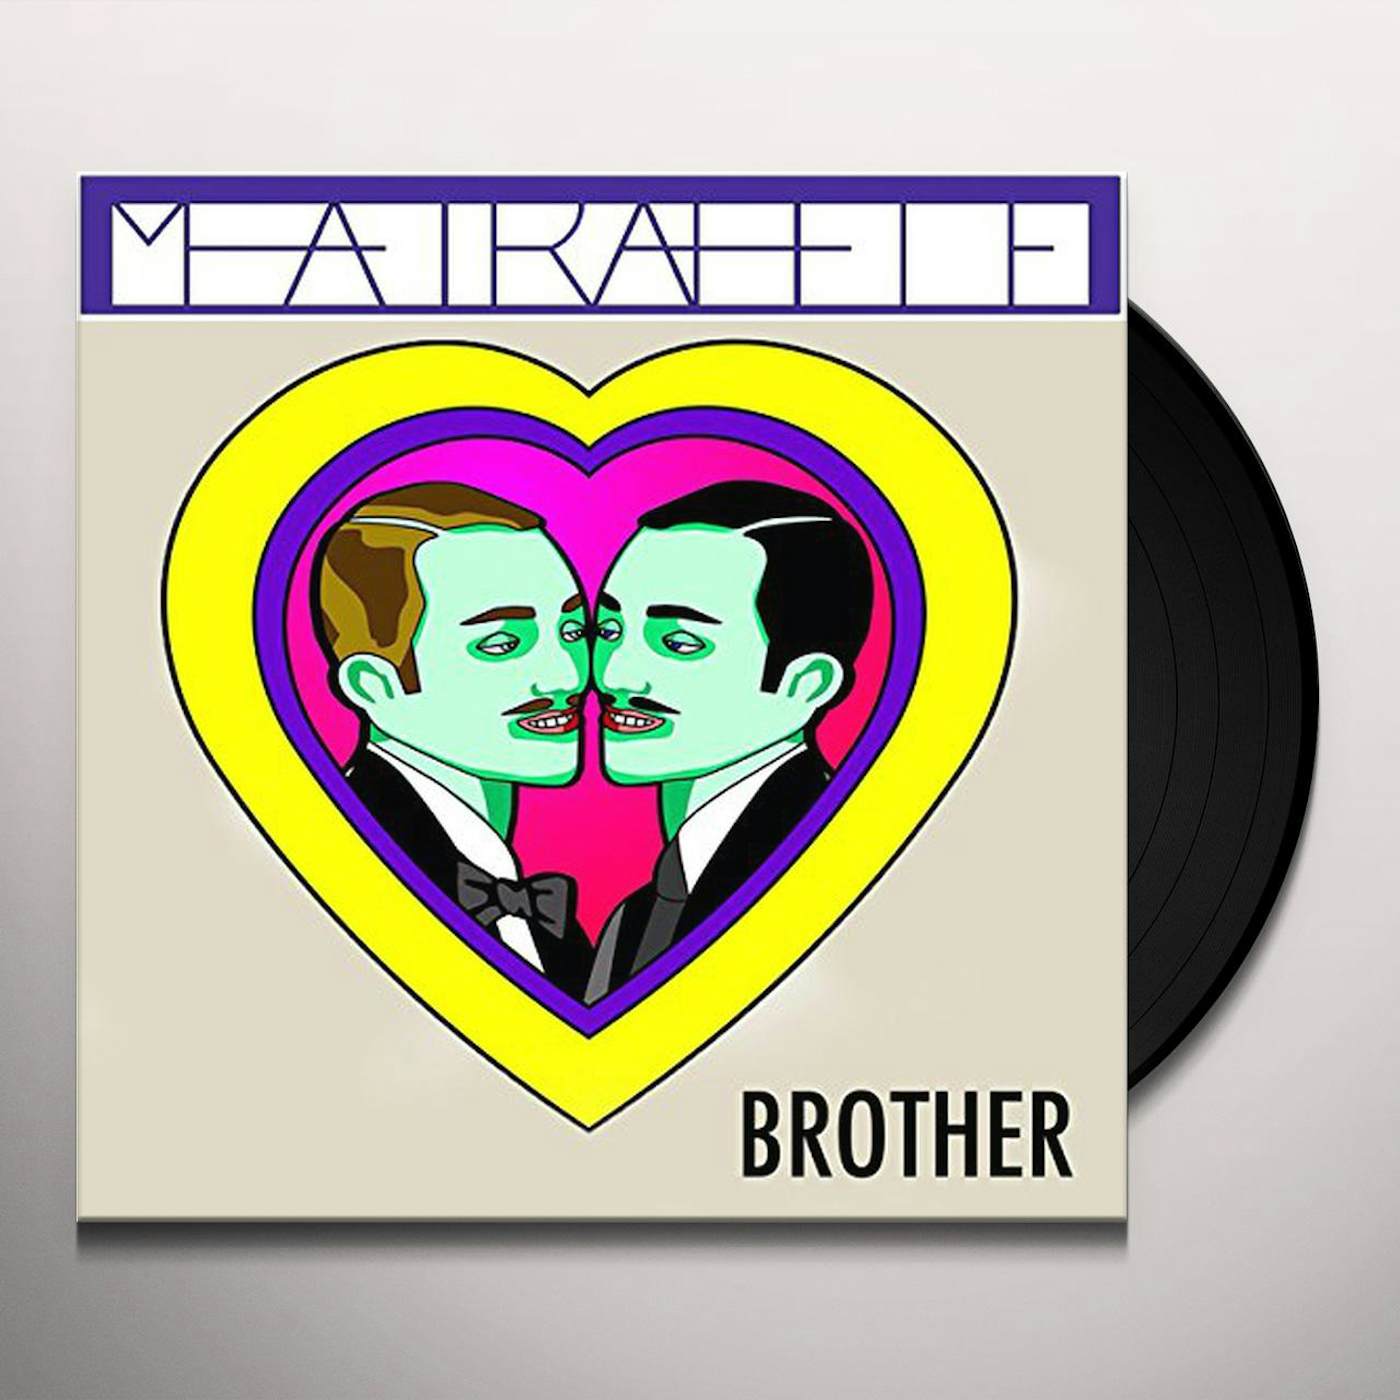 Meatraffle Brother Vinyl Record